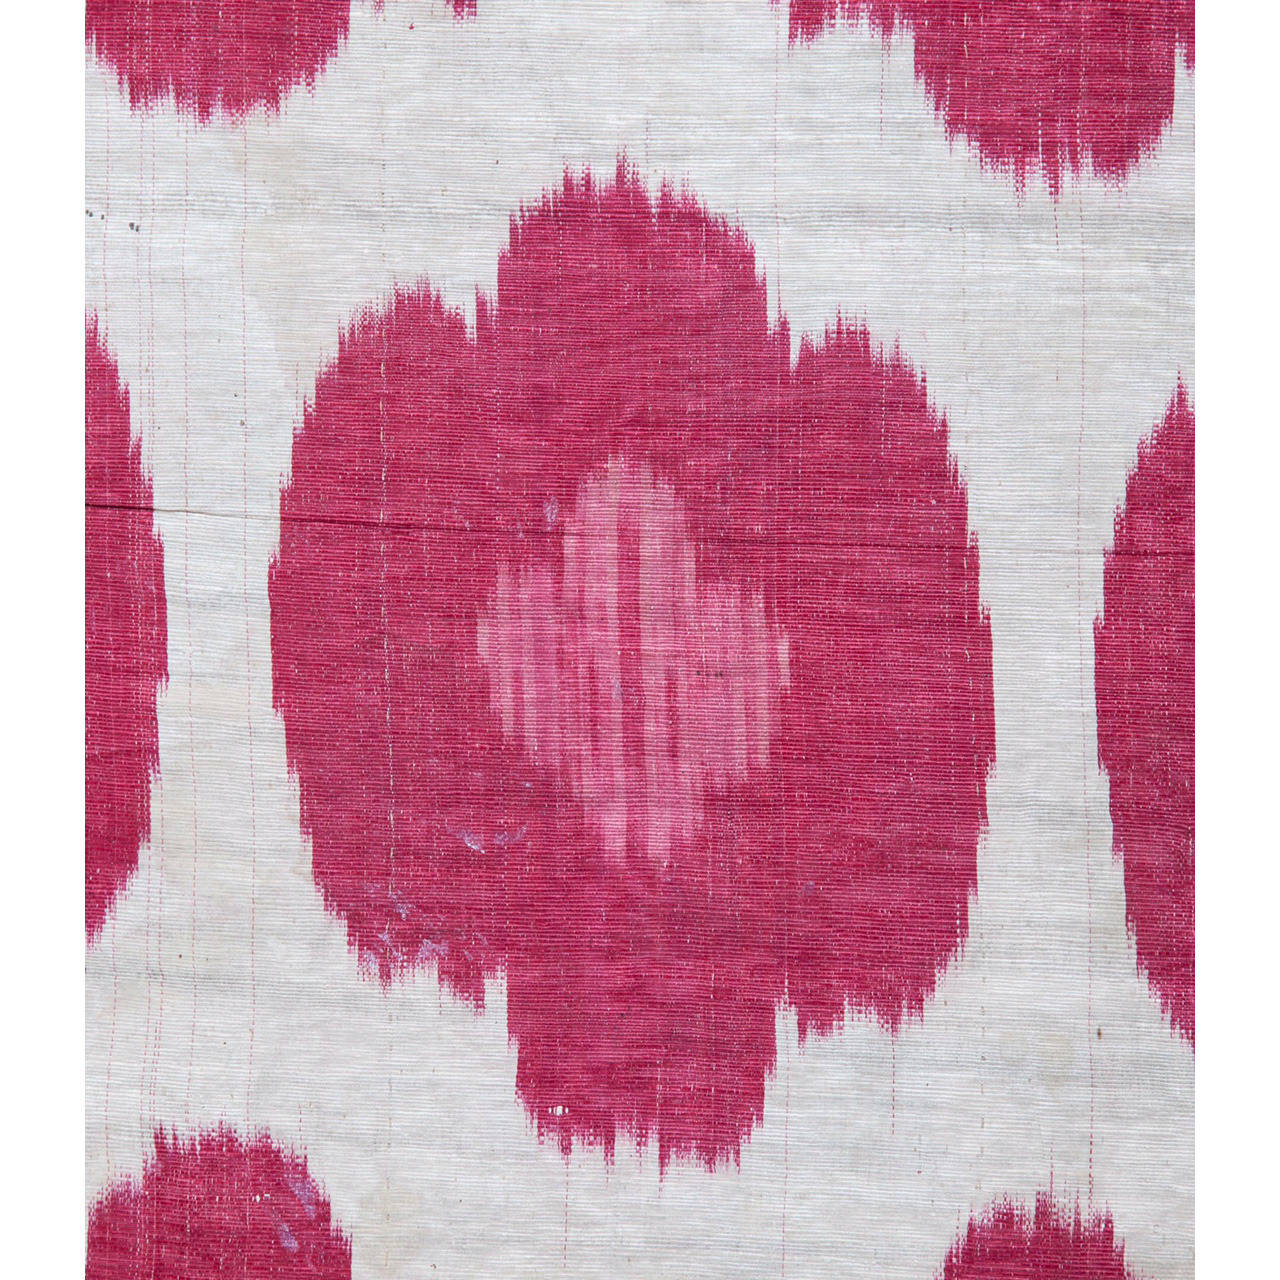 Tribal Late 19th Century Uzbek Ikat Textile Panel For Sale